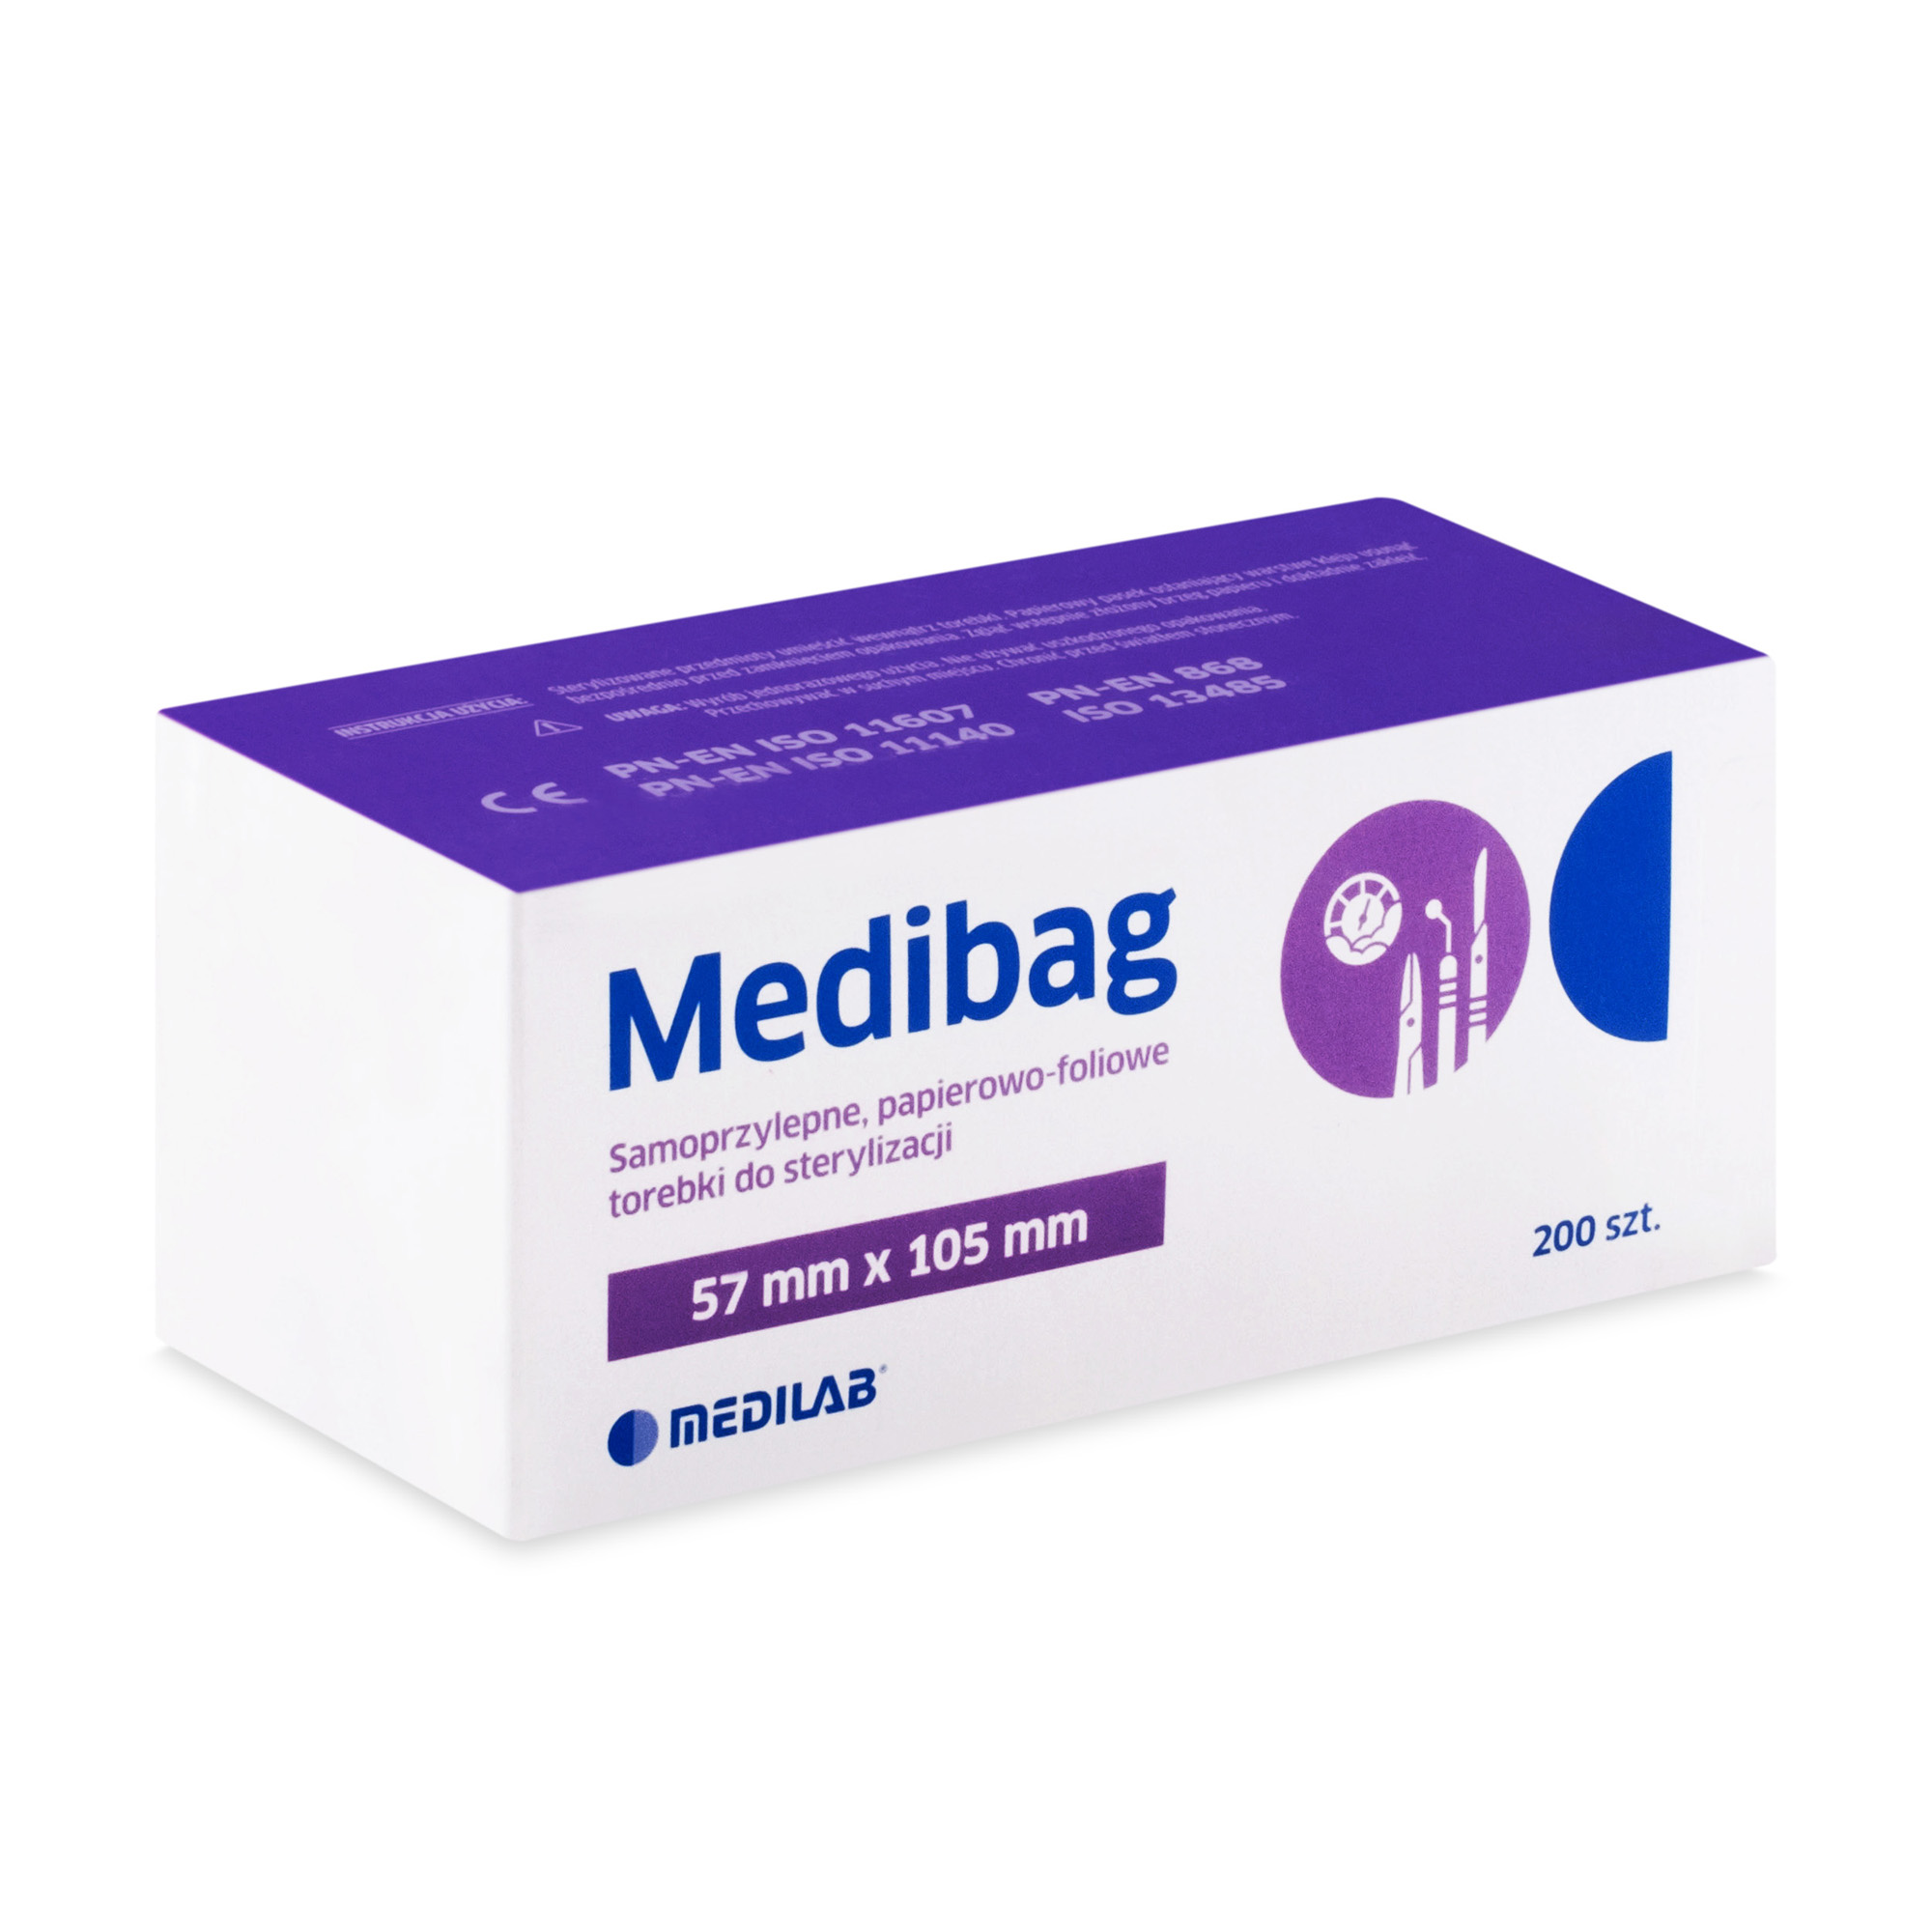 MediBag – Torebki do sterylizacji 57mm x 105mm (200szt)